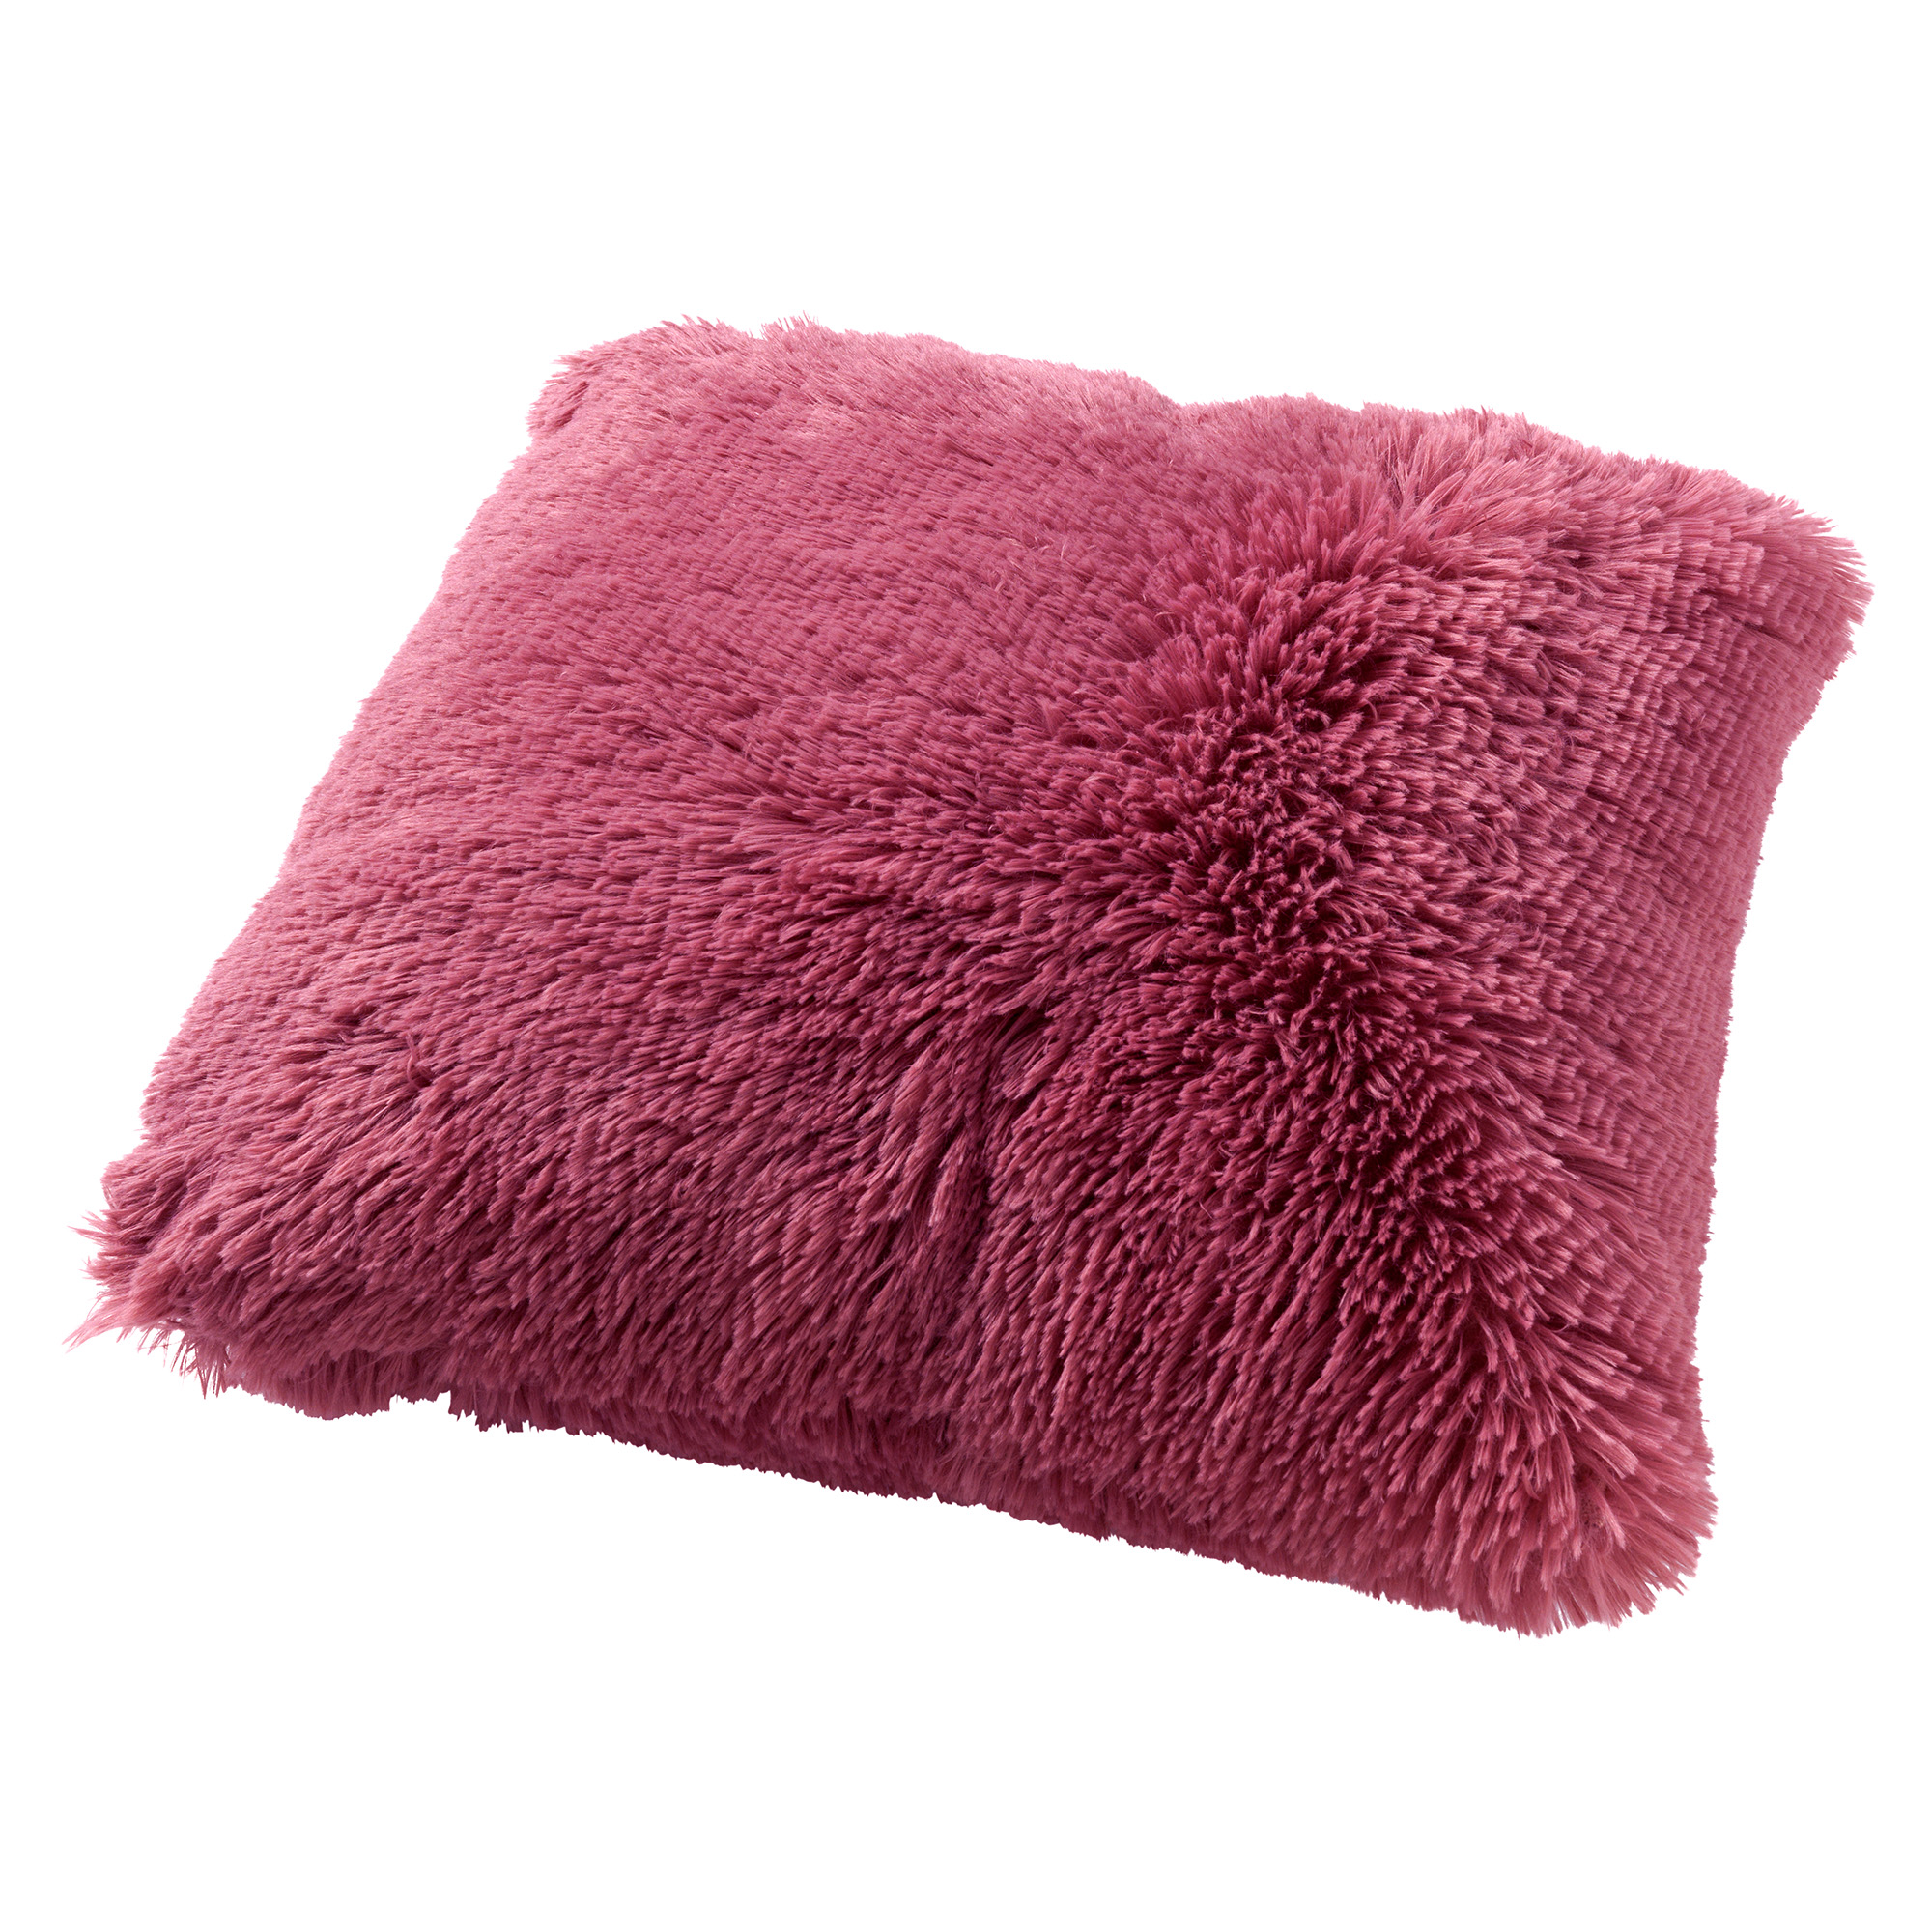 FLUFFY - Kussenhoes 45x45 cm - superzacht - effen kleur - Heather Rose - roze